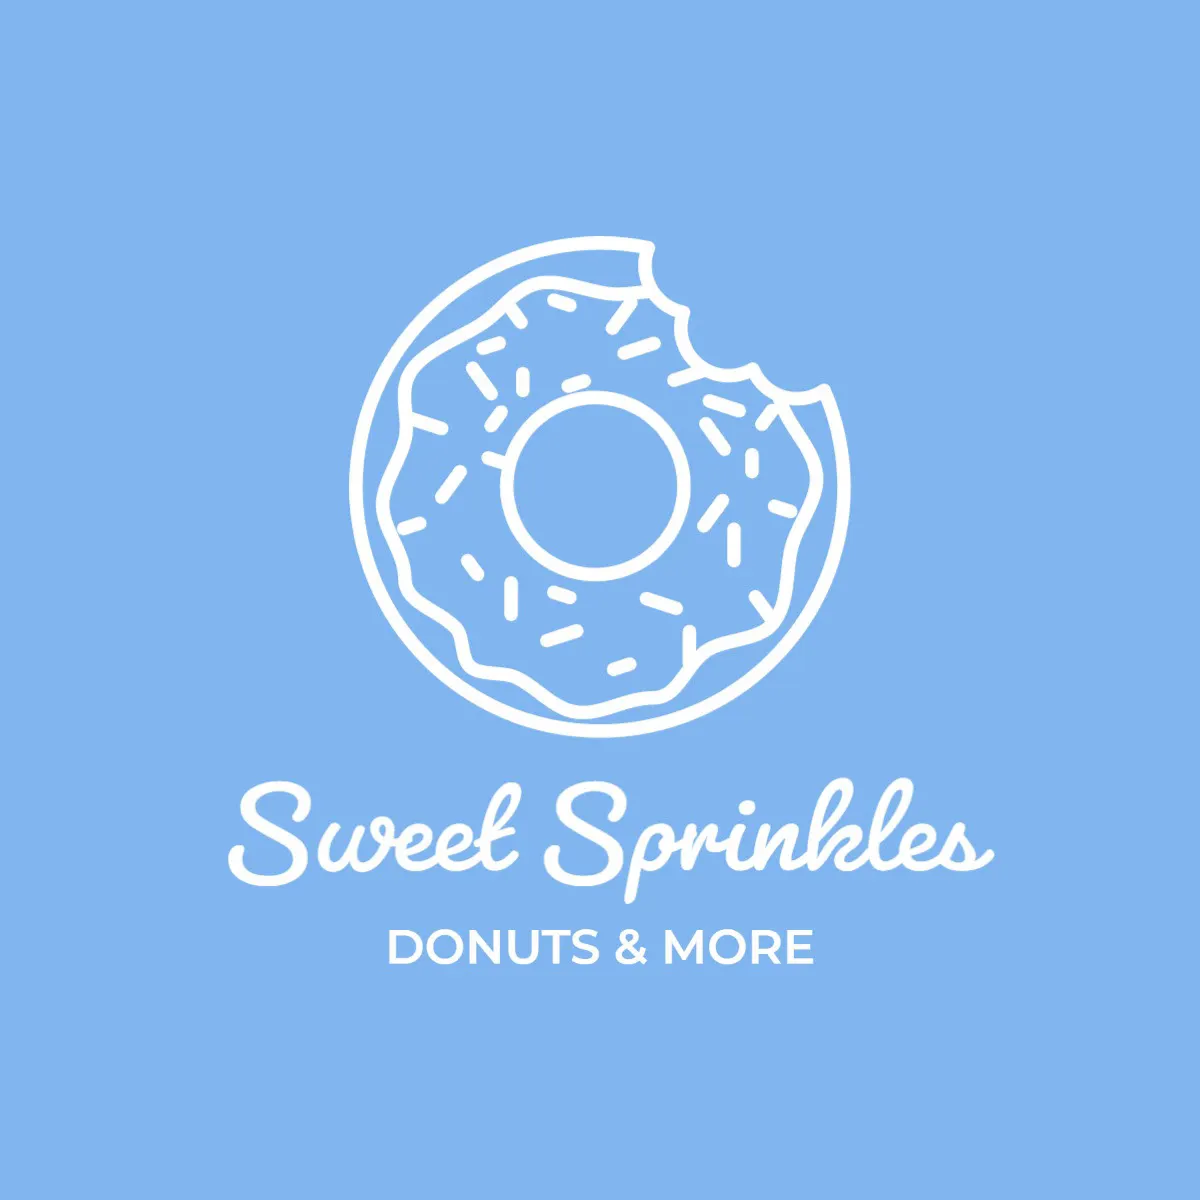 Blue And White Donut Bakery Logo